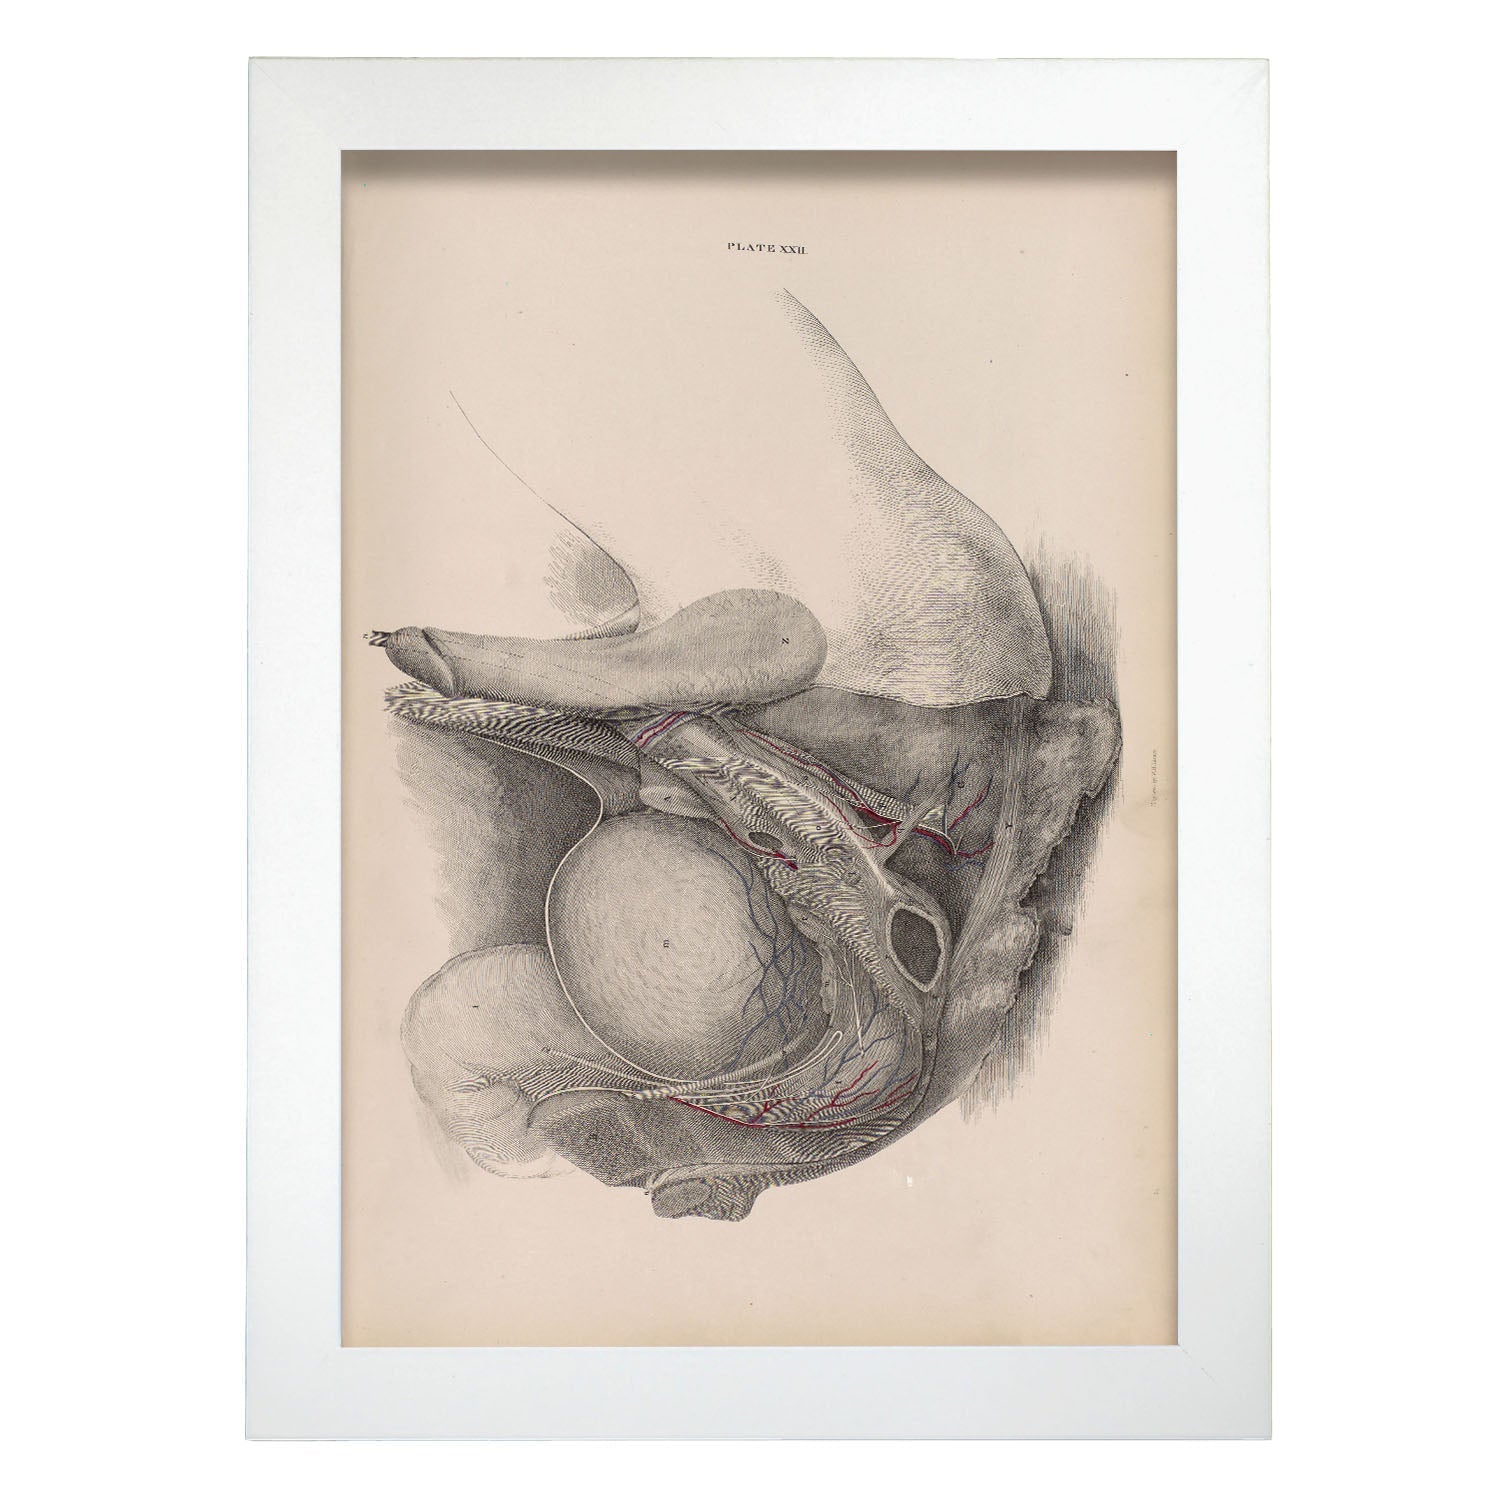 Dissection of the pelvis, urogenital system, male-Artwork-Nacnic-A4-Marco Blanco-Nacnic Estudio SL